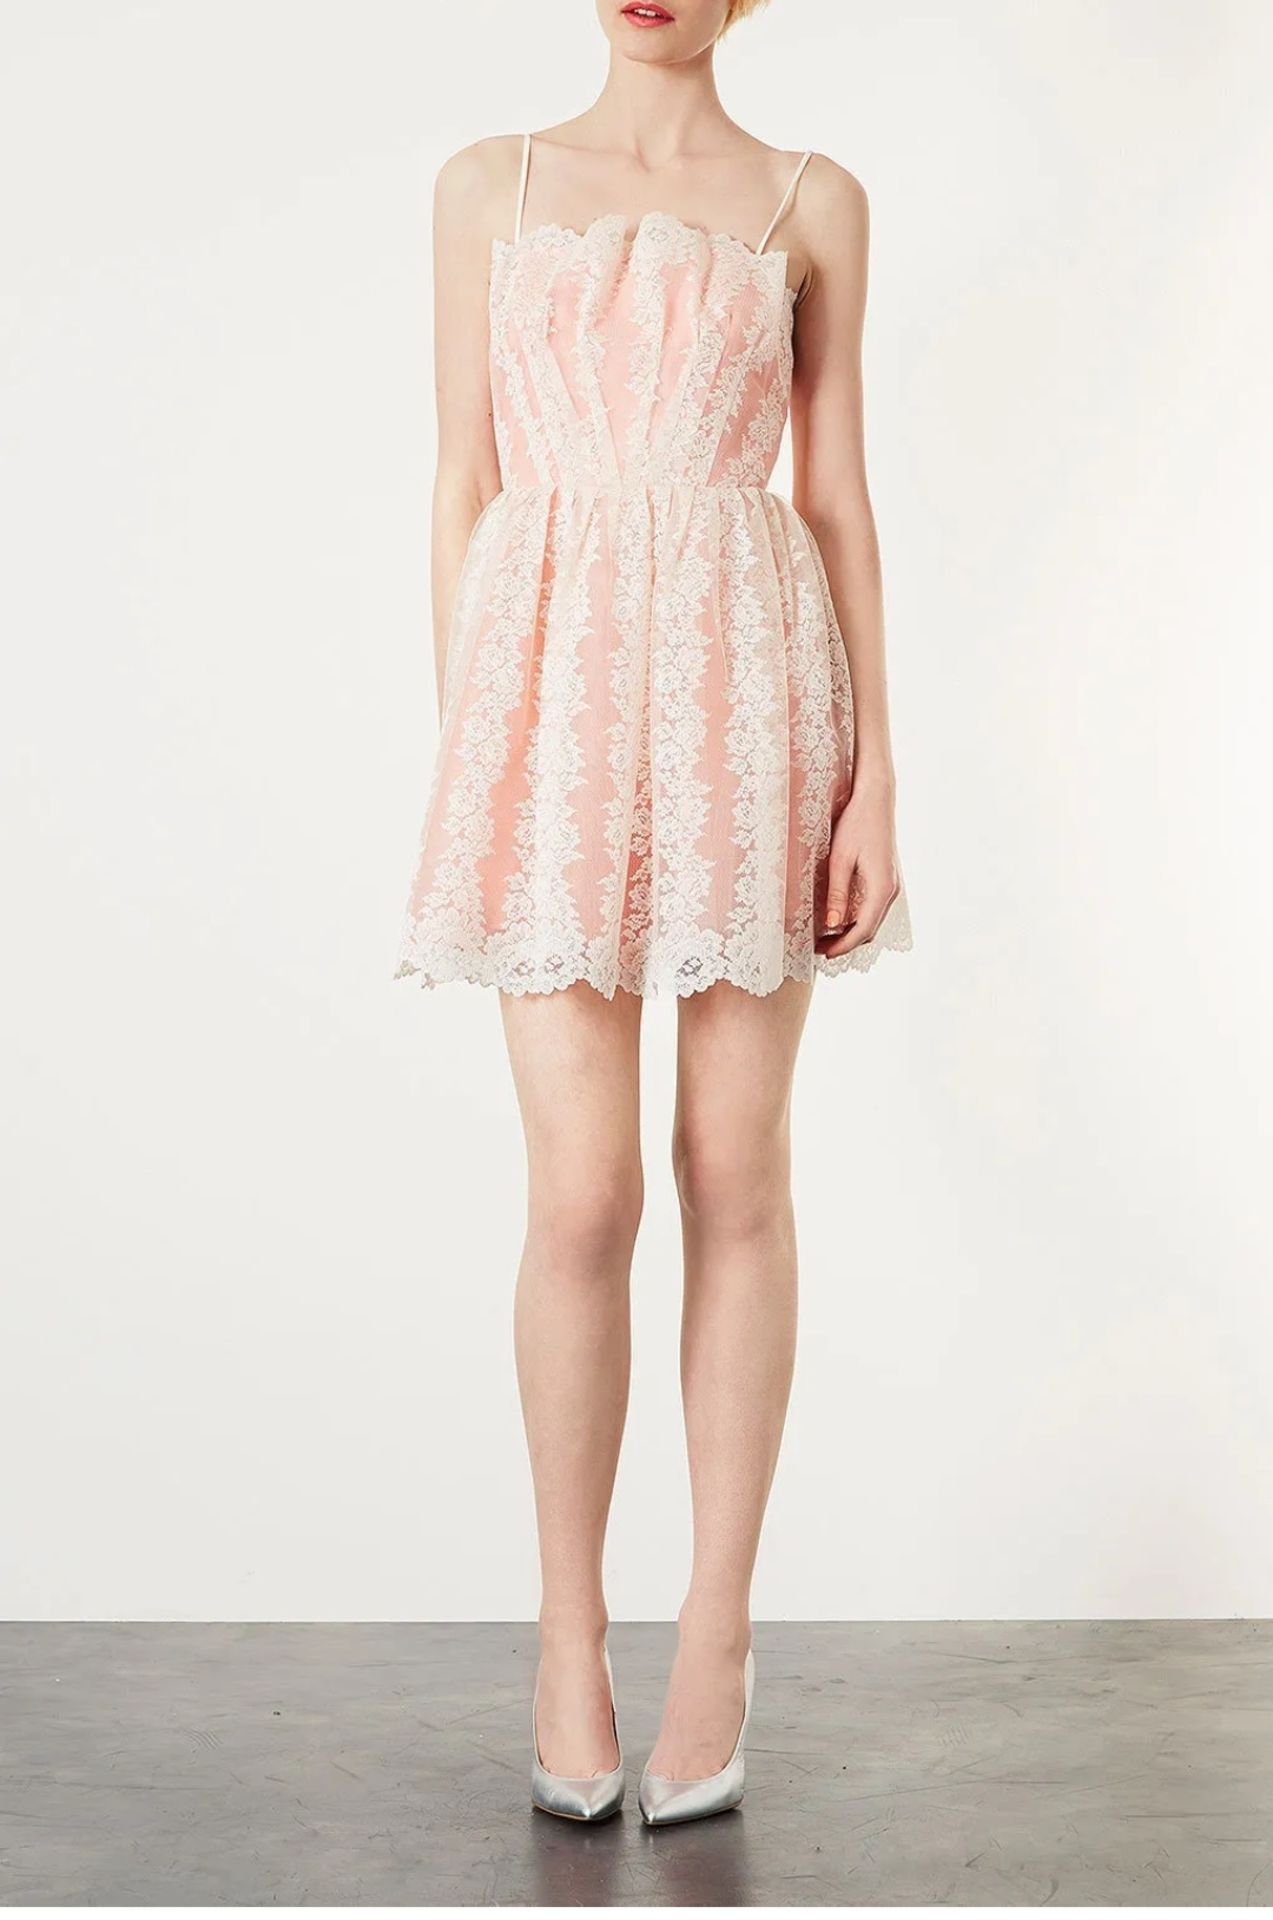 Liquidation Stock: New Ladies Lace Embellished Dress x 10 RRP £500 - Bild 2 aus 2